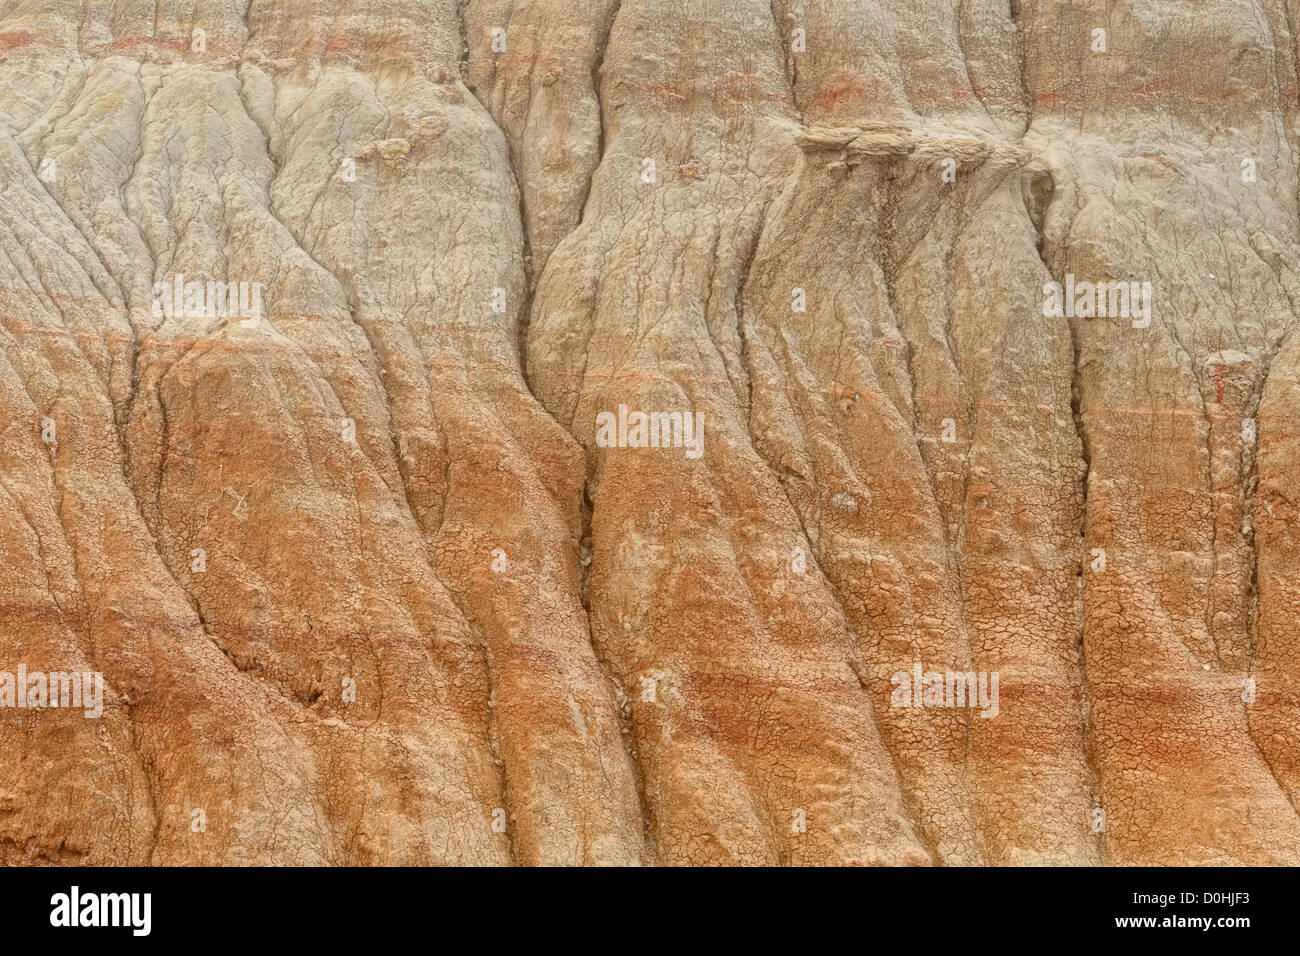 Bentonite bluffs with eroding mudstone layers, Theodore Roosevelt National Park (South Unit), North Dakota, USA Stock Photo